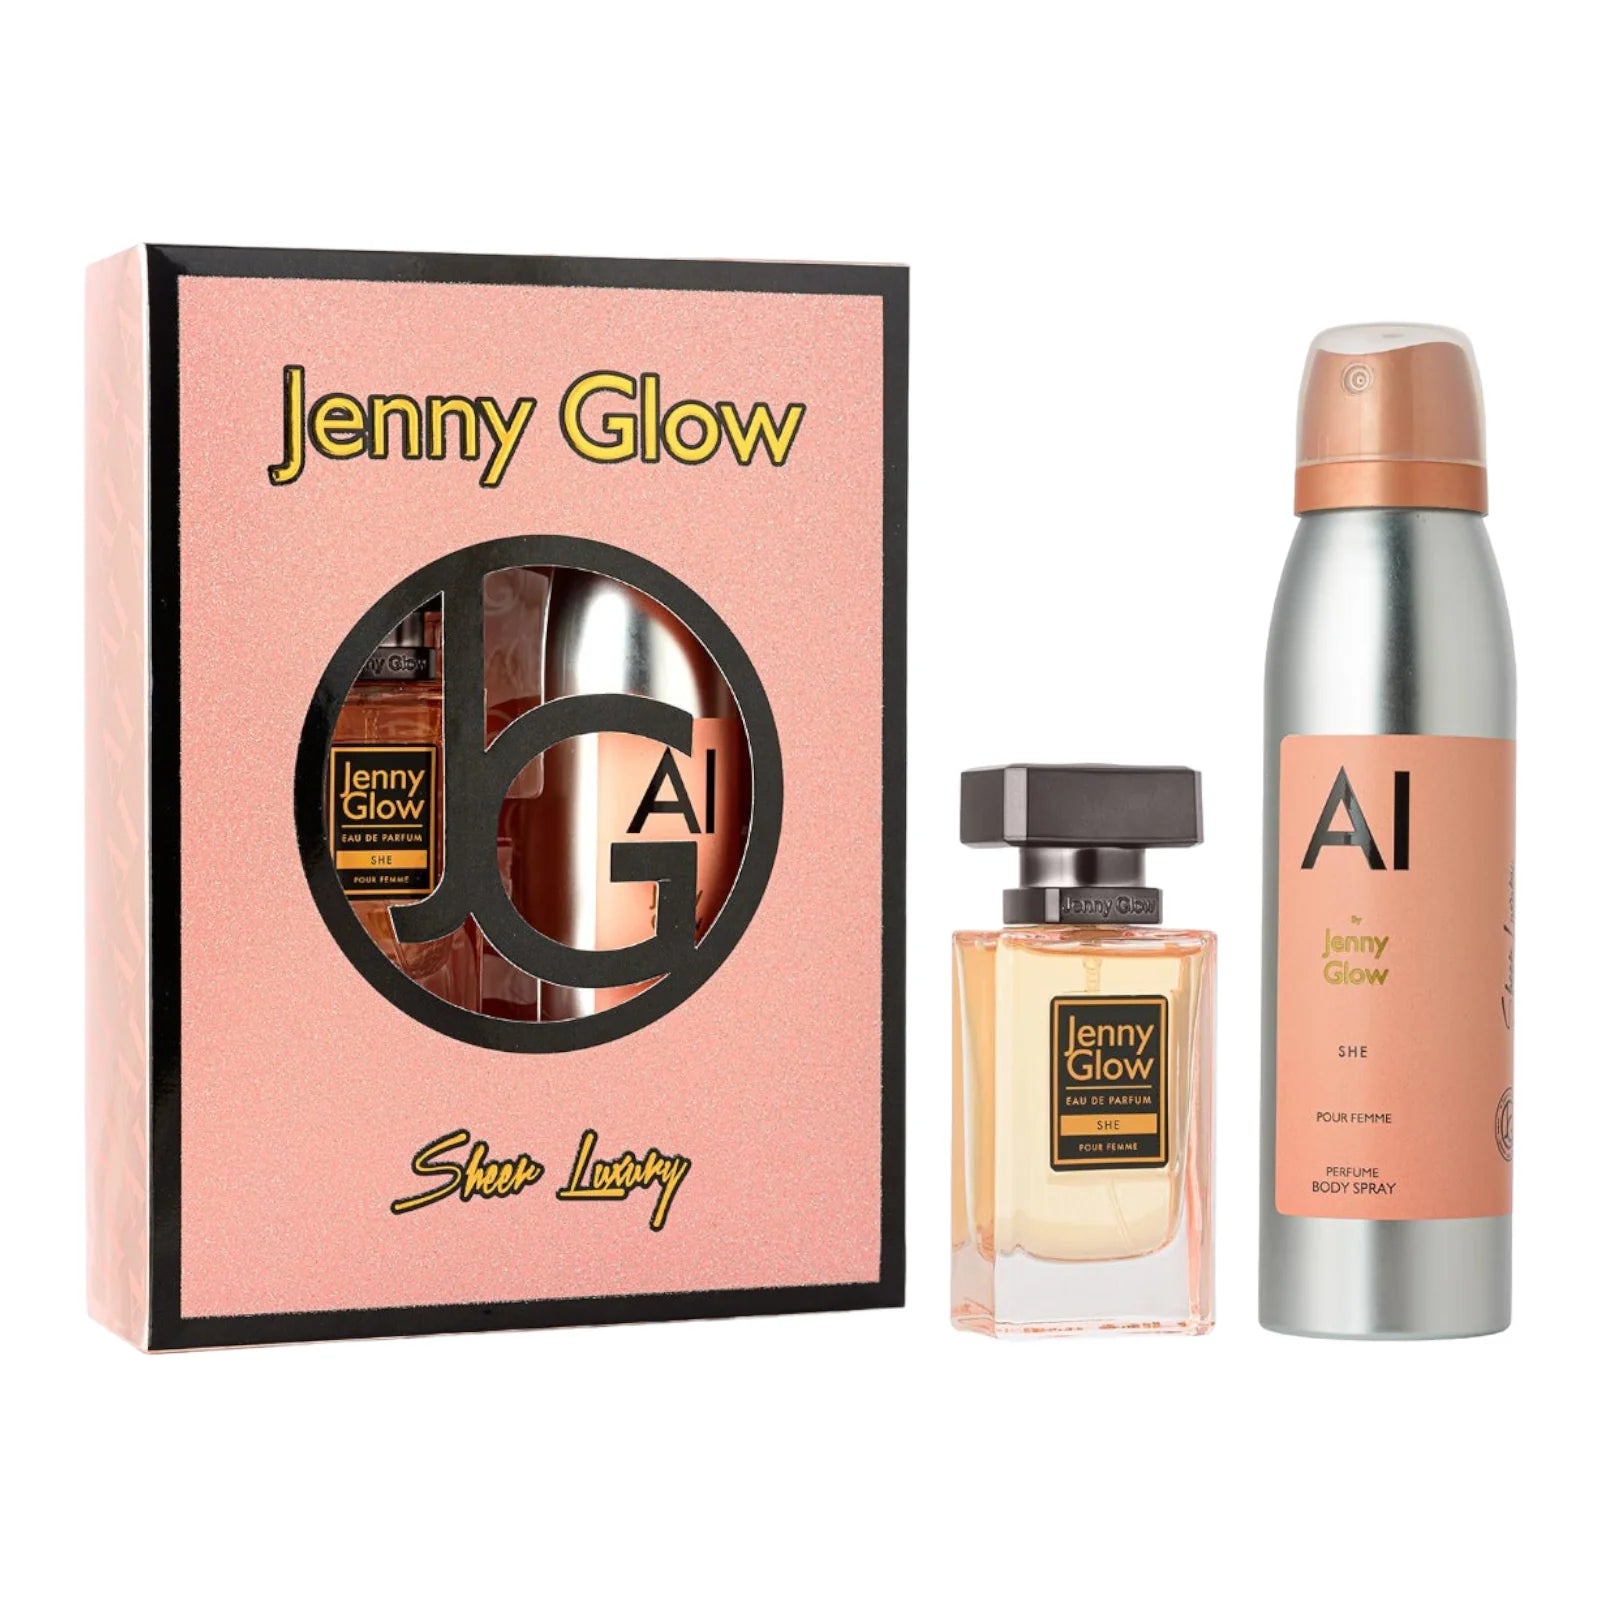 Jenny Glow She Perfume & Body Spray Gift Set 